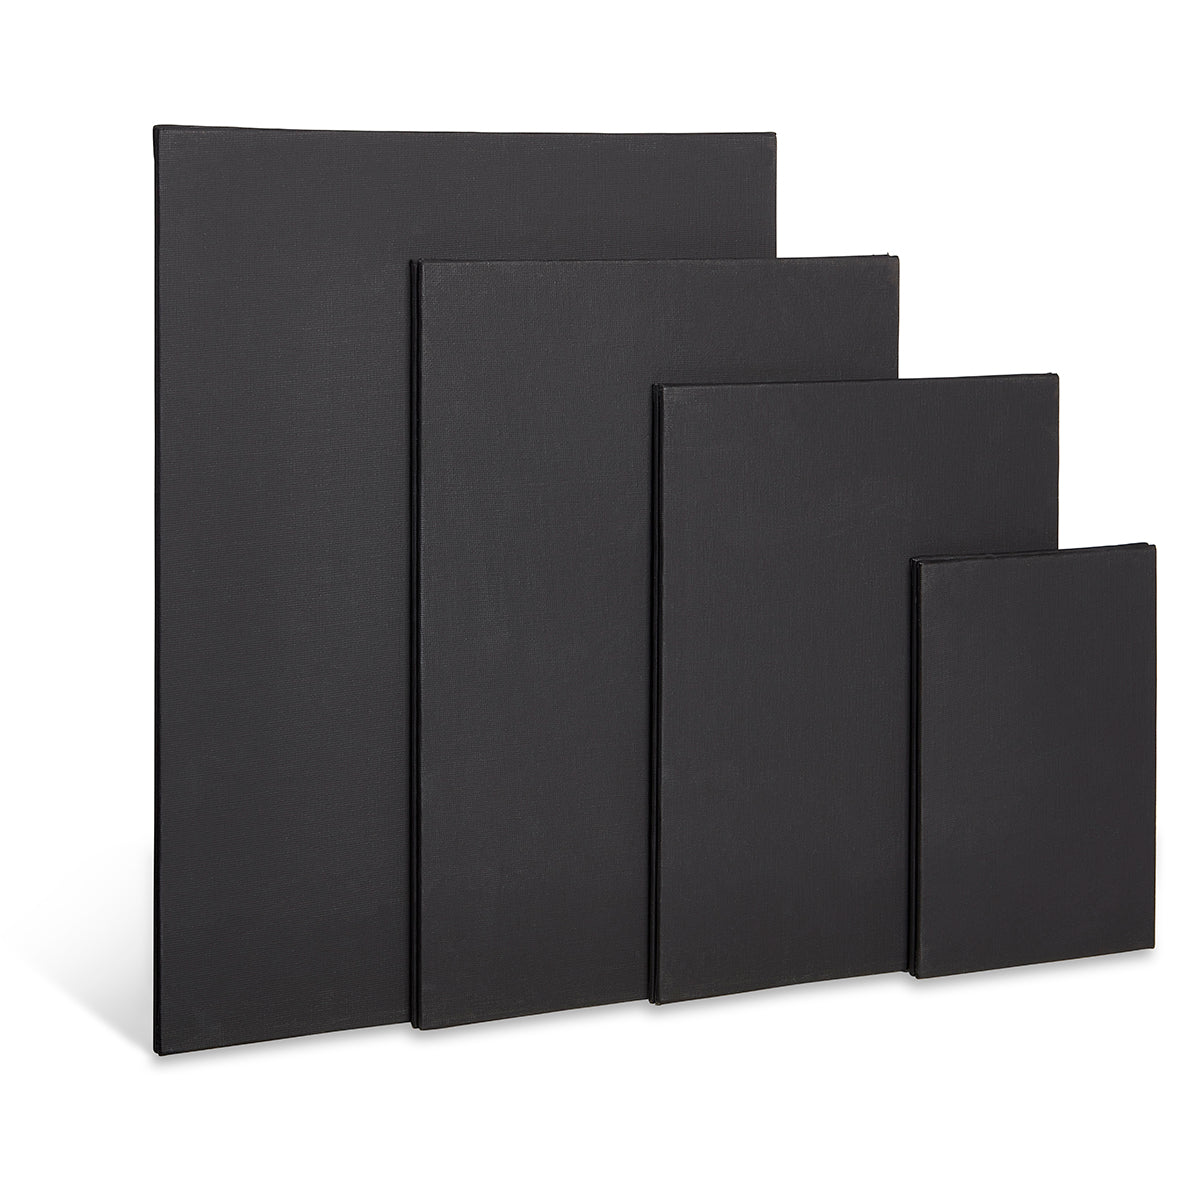 Kingart White Canvas Panels, Classic, Multiple Sizes, Set of 28 (7 ea. of 6x6, 8x8, 10x10, 12x12)